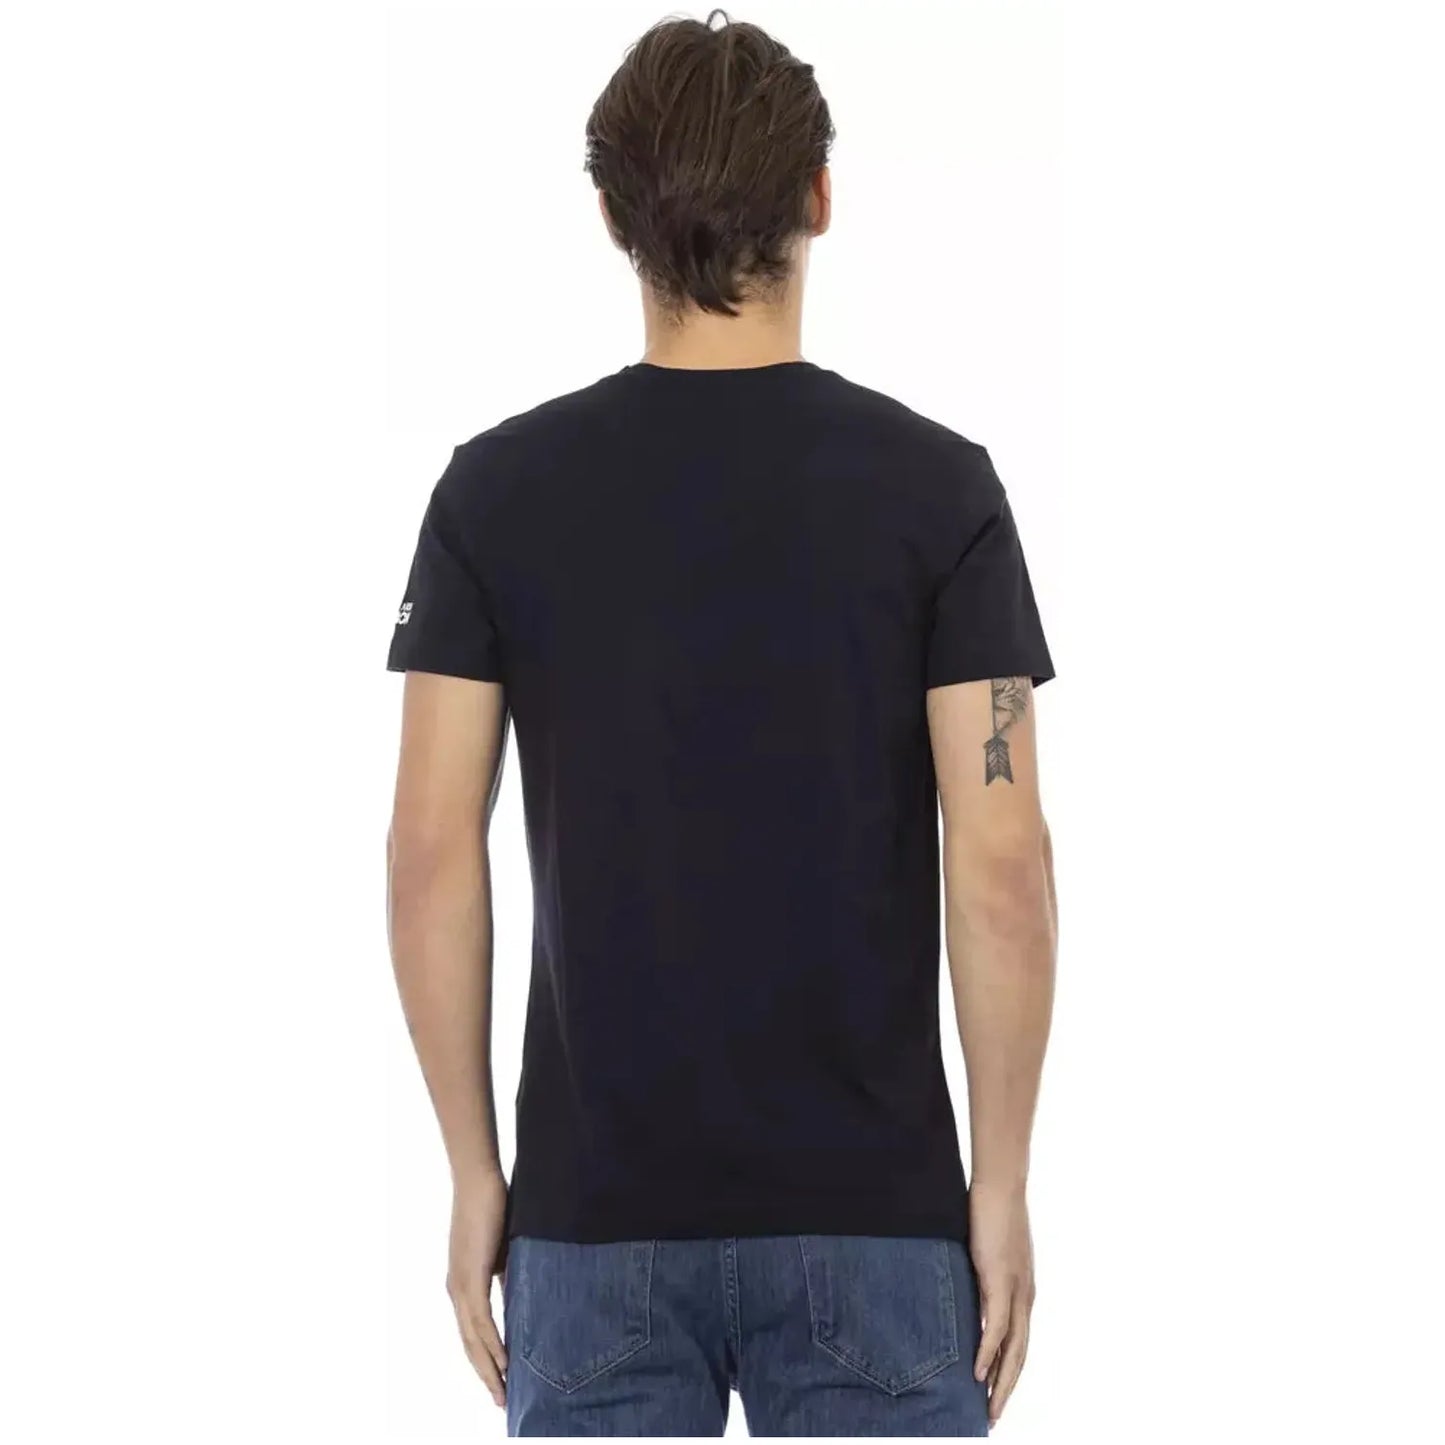 Trussardi Action Elegant V-Neck Tee with Front Print black-cotton-t-shirt-27 product-22873-241815190-19-eb250204-039.webp